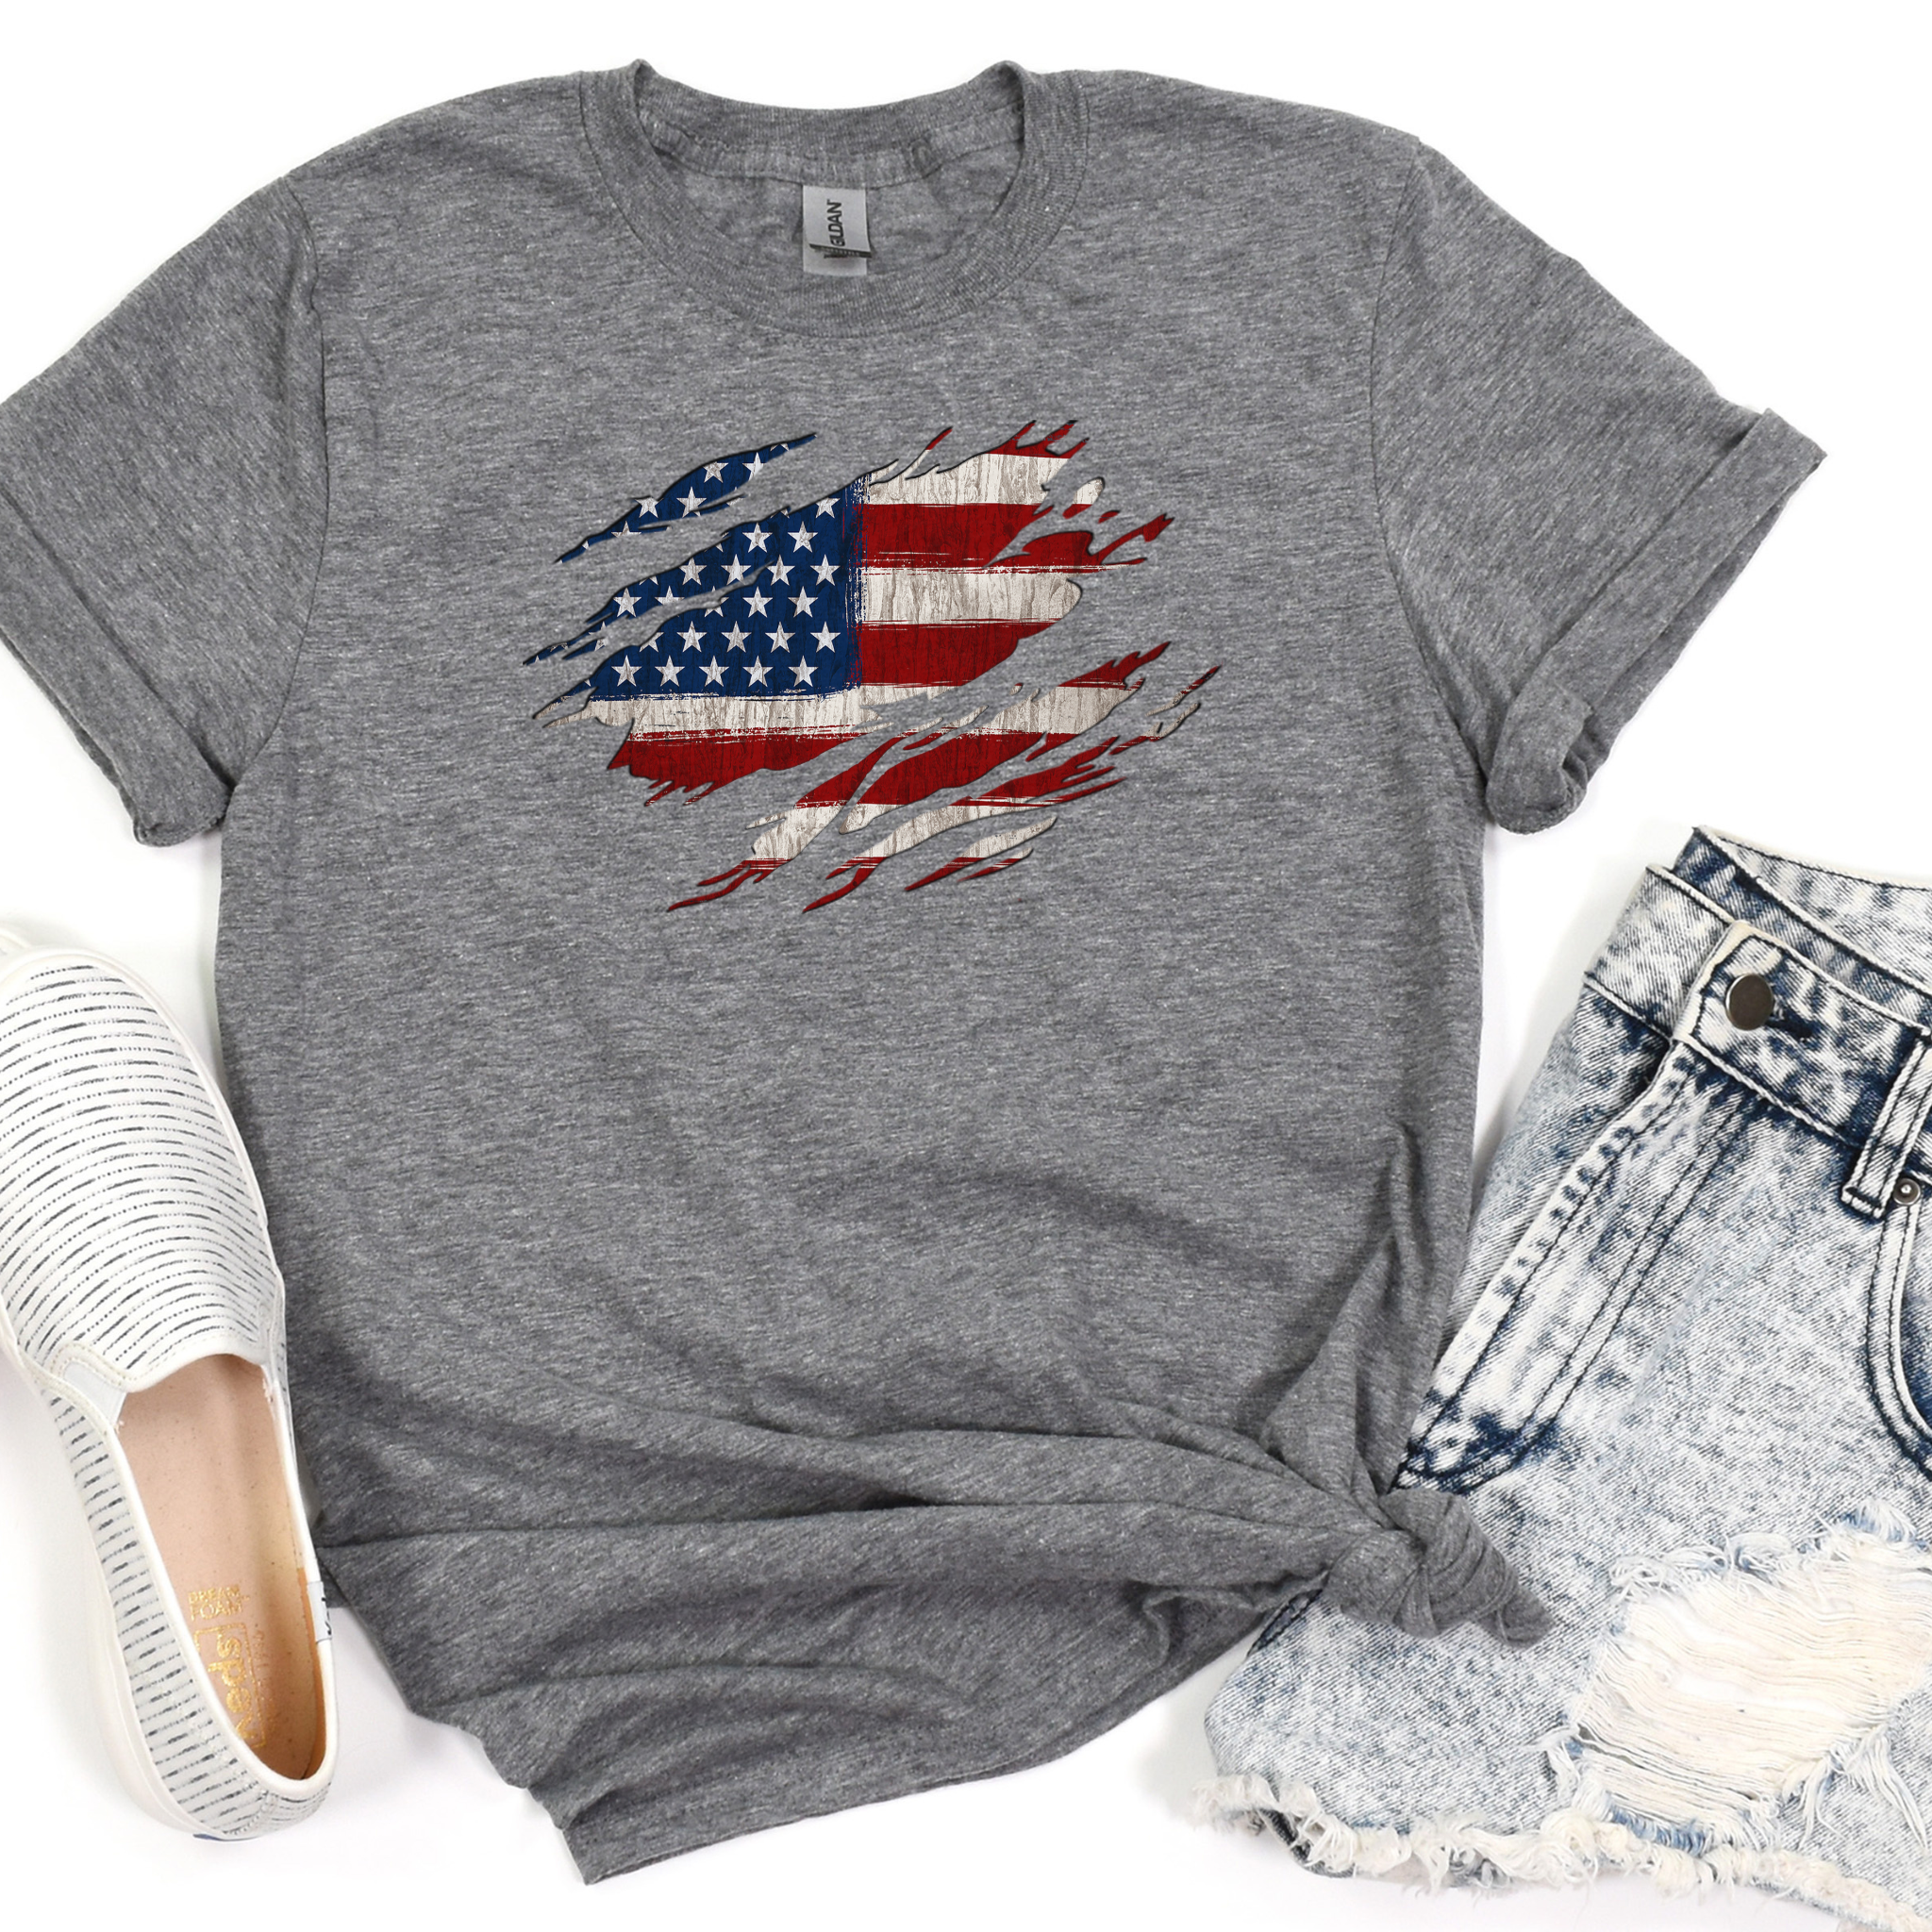 Tattered American Flag T-Shirt